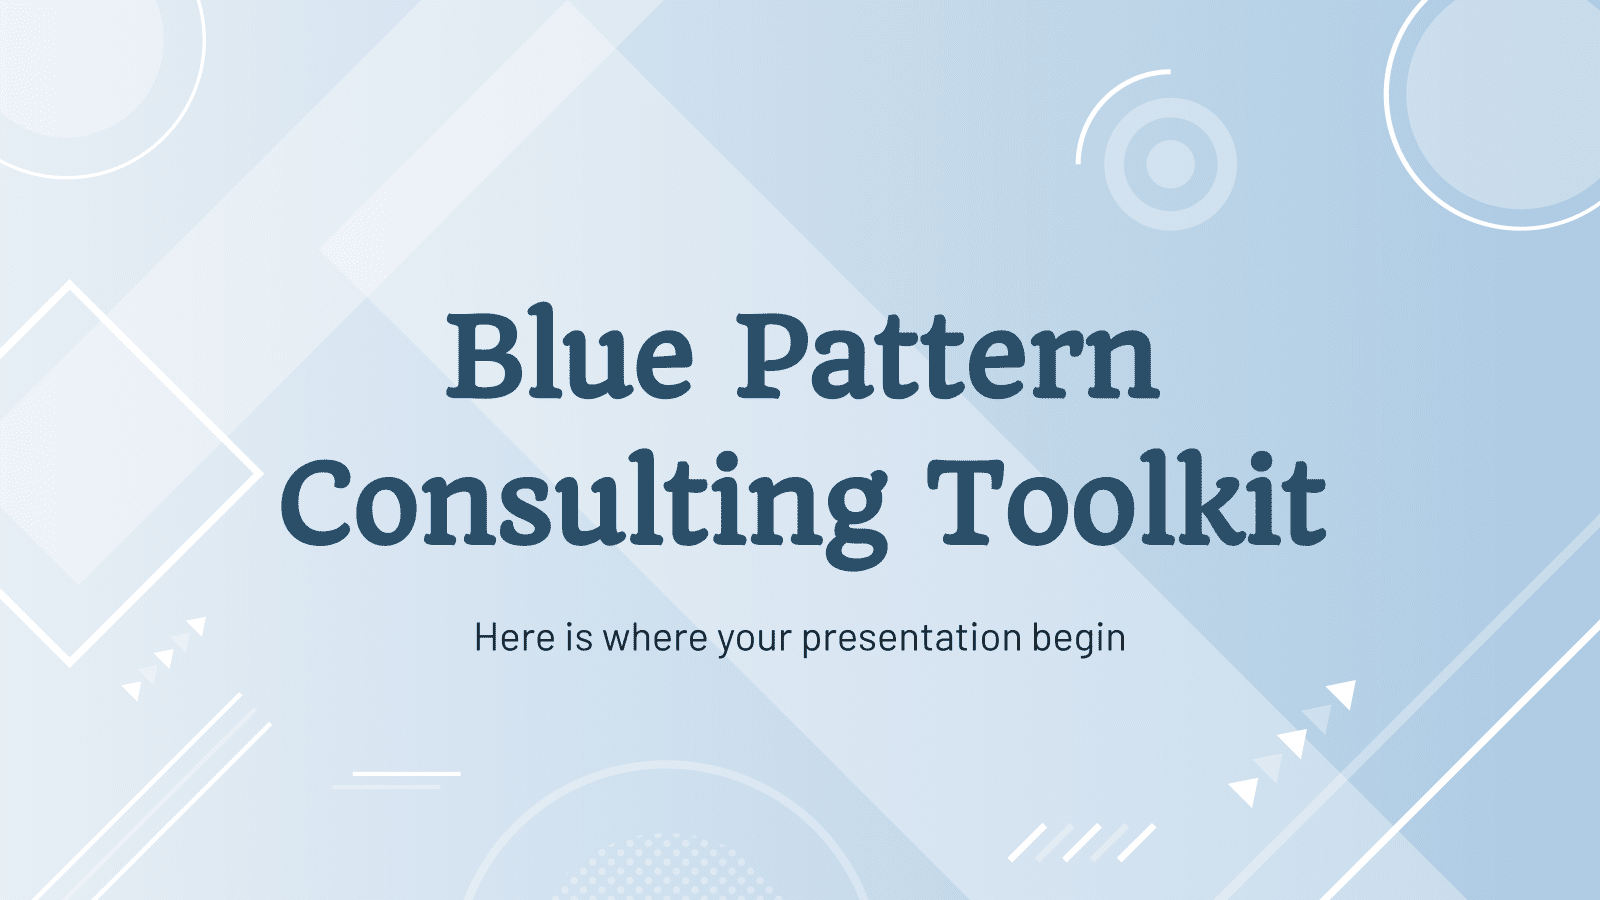 Blue Pattern咨询工具包PPT模板